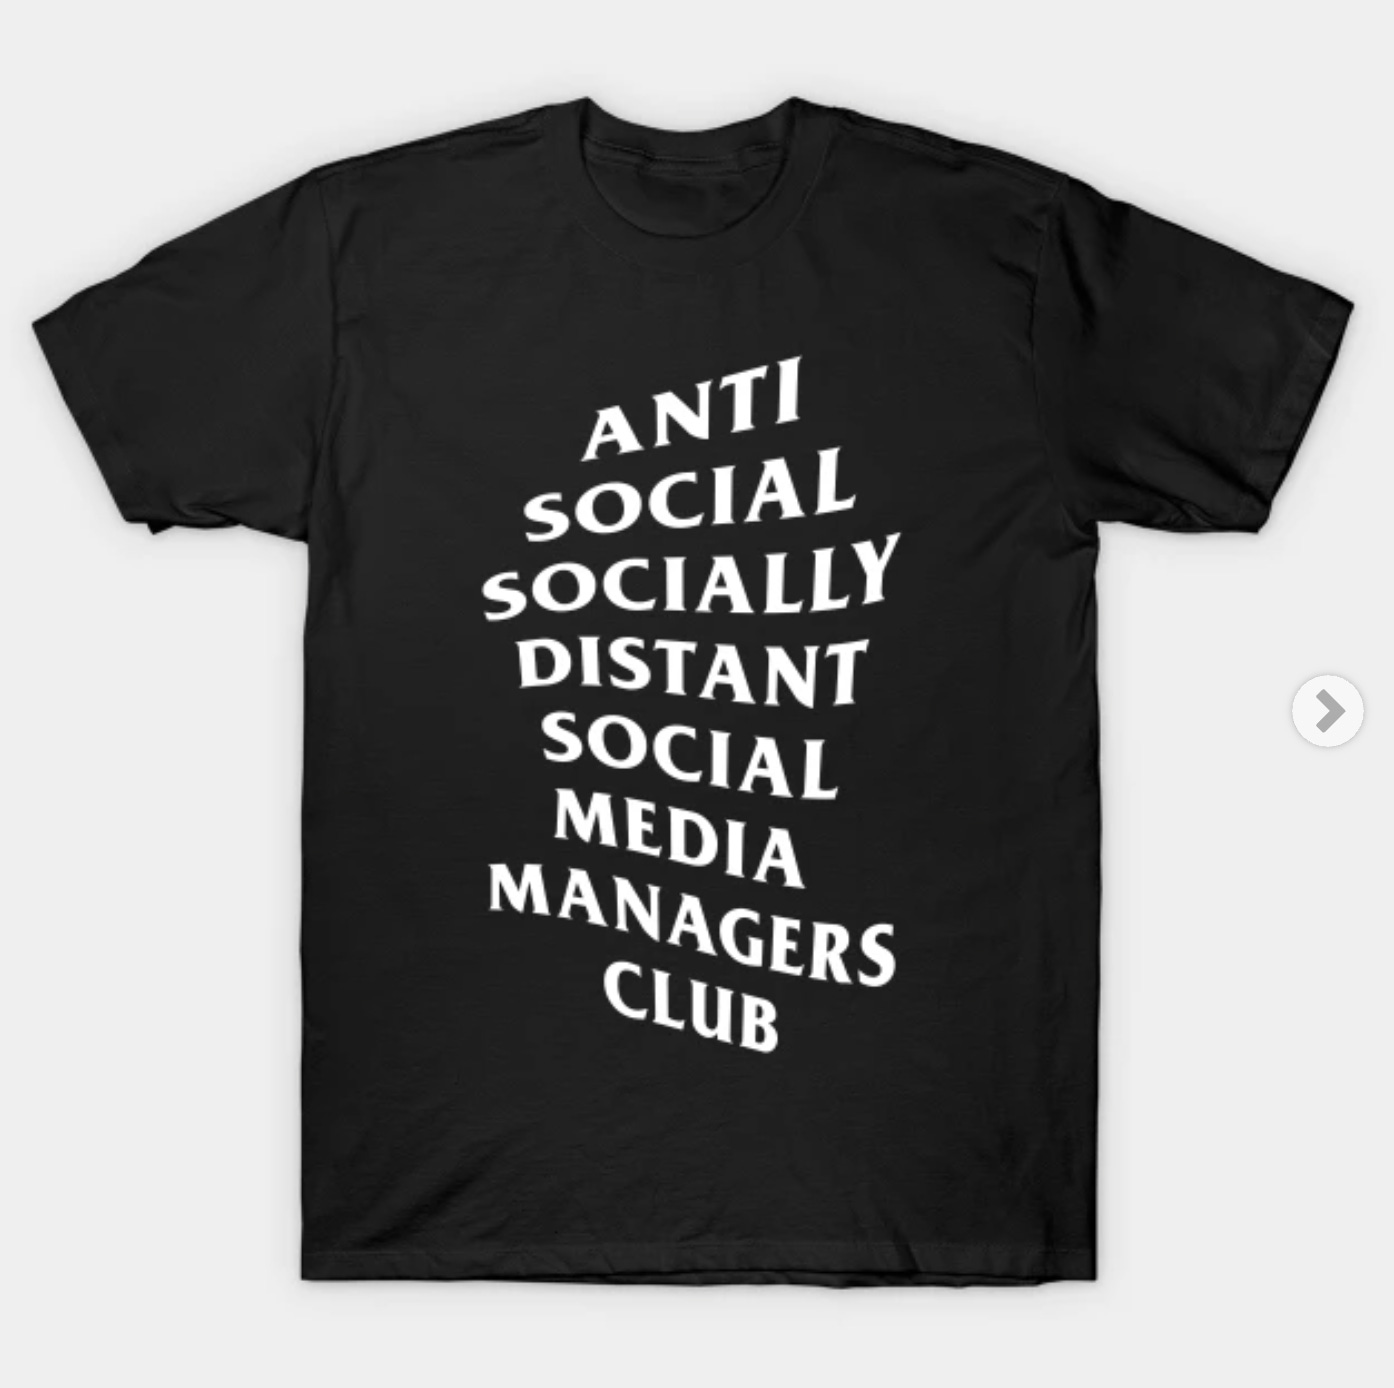 A t-shirt saying Anti Social Socially Distant Social Media Managers Club